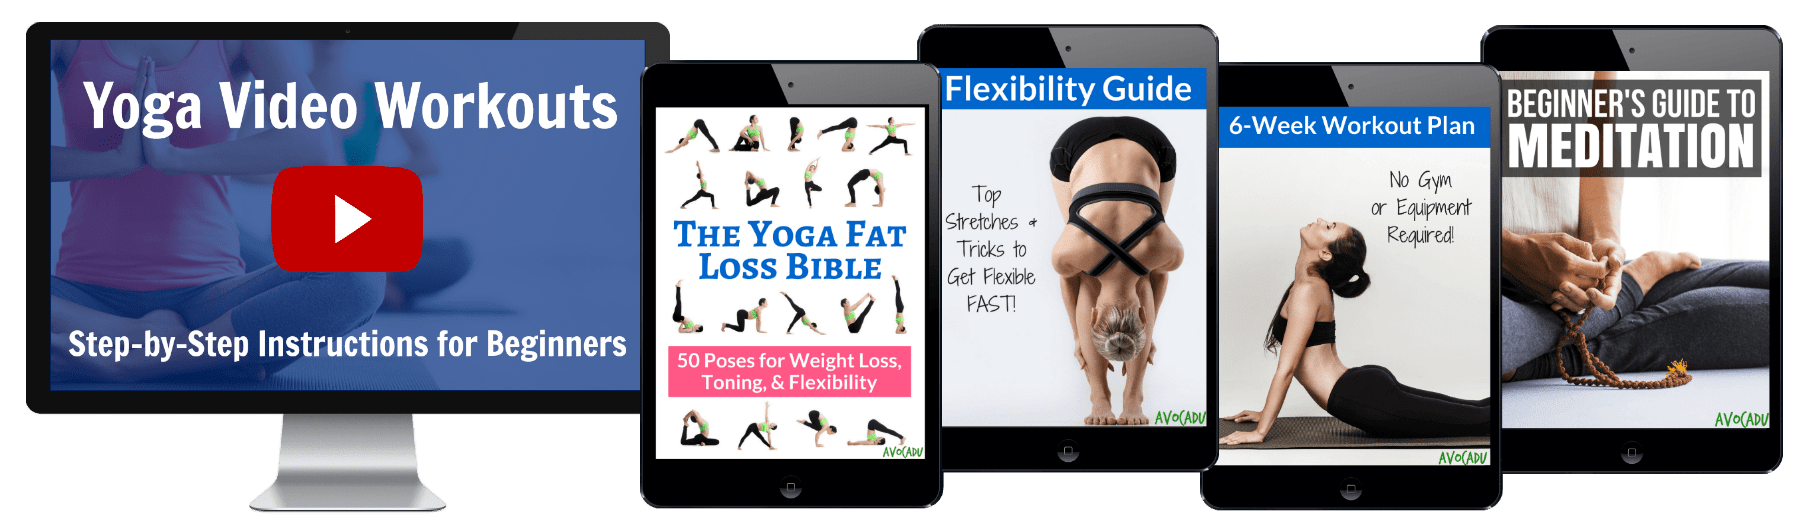 Yoga Fat Loss Bible by Avocadu